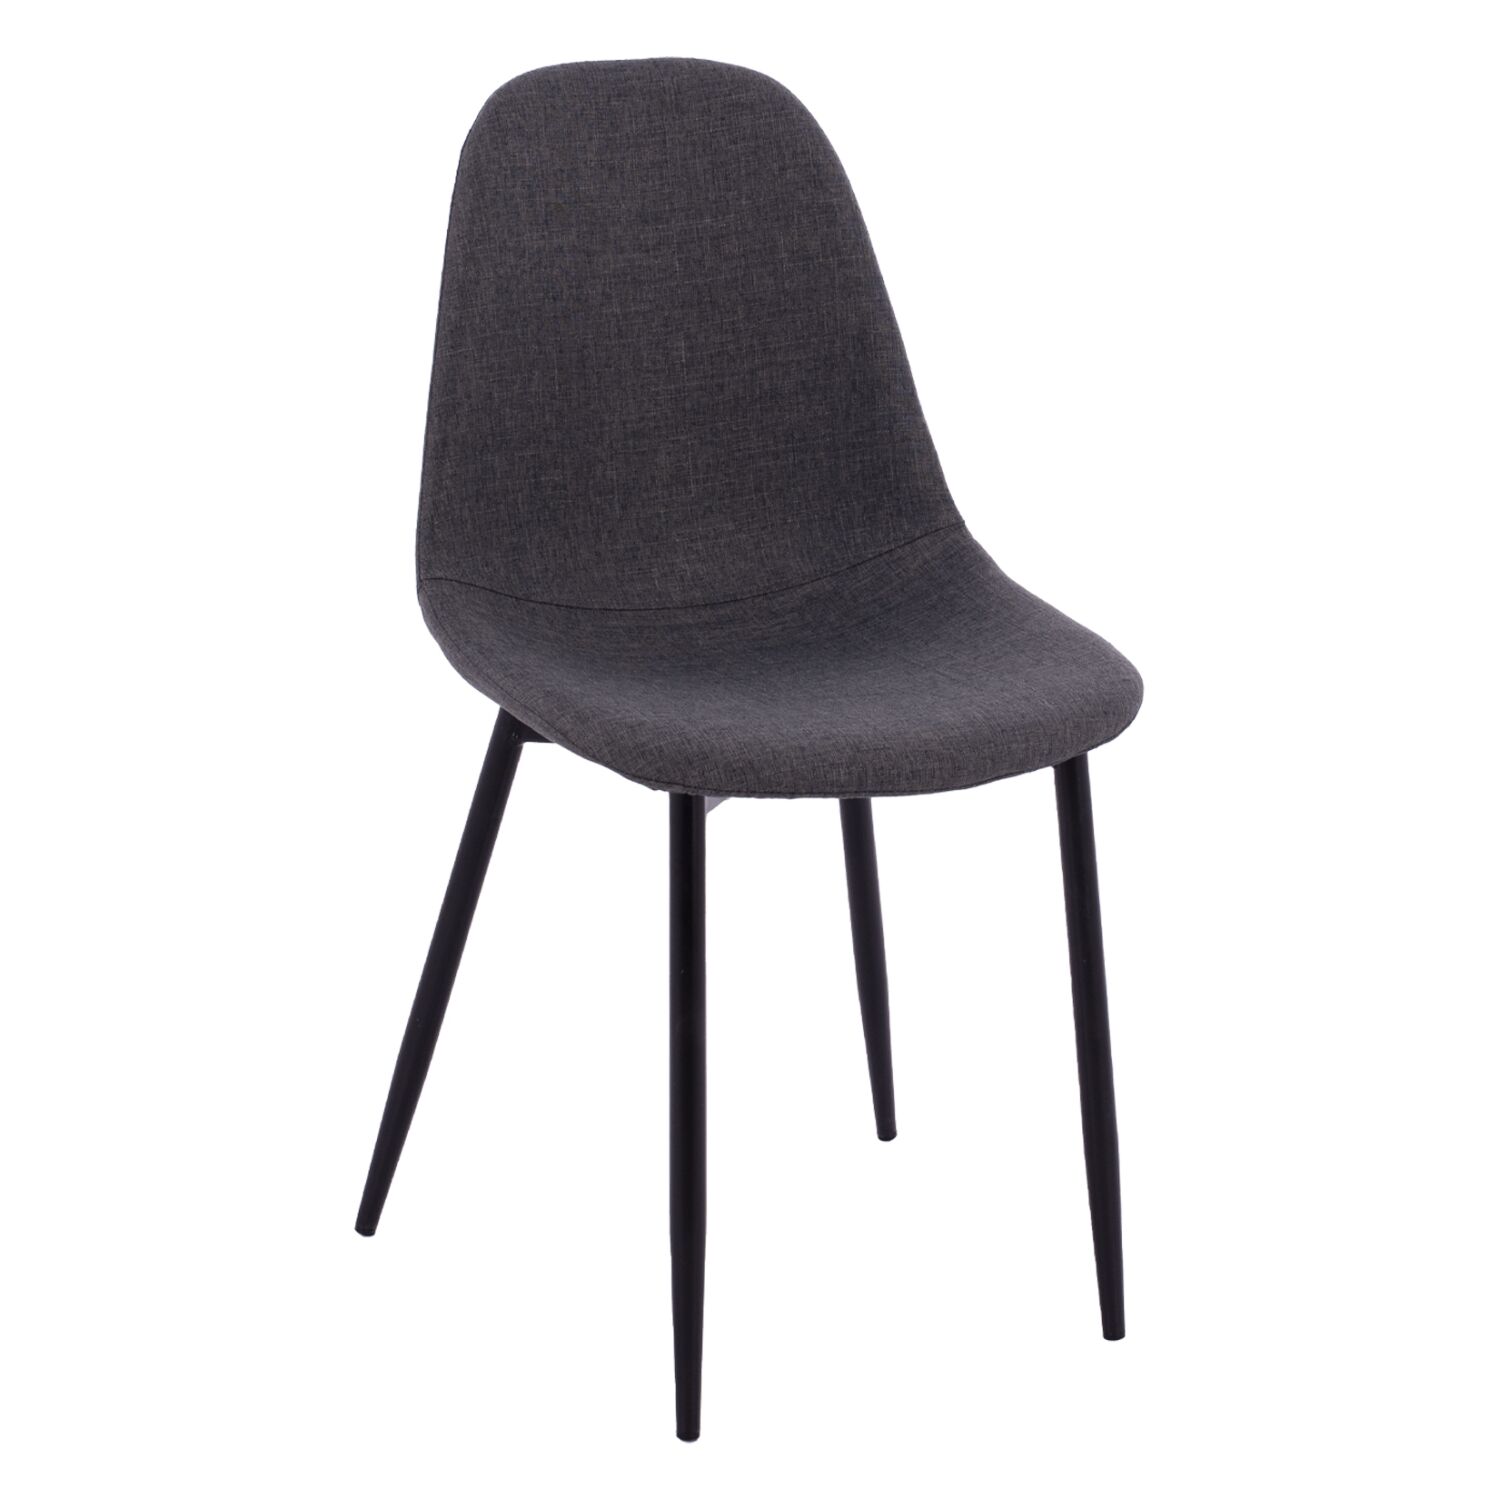 Dining chair Leonardo HM00100.16 with metallic legs and dark grey fabric 43,5x59x84 cm.